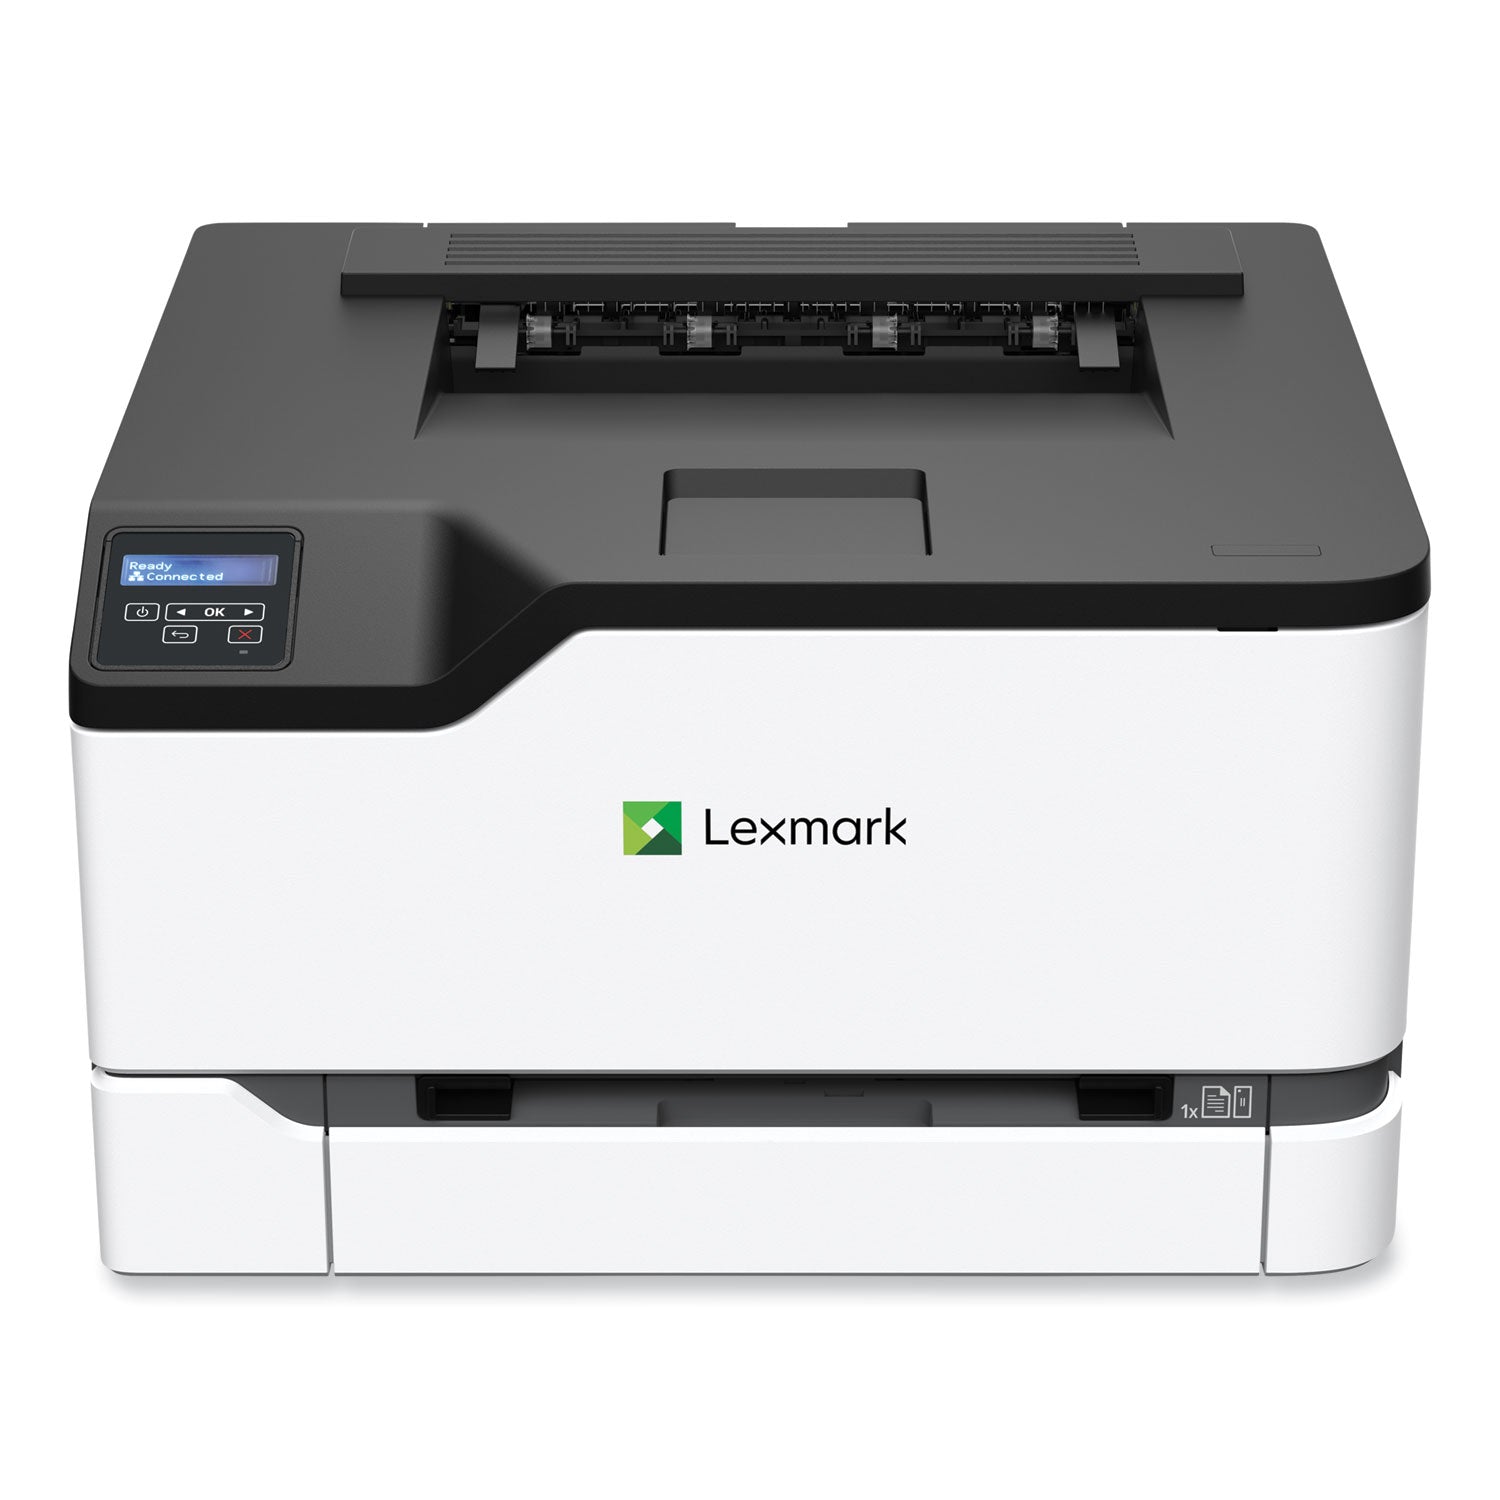 cs331dw-laser-printer_lex40n9020 - 1